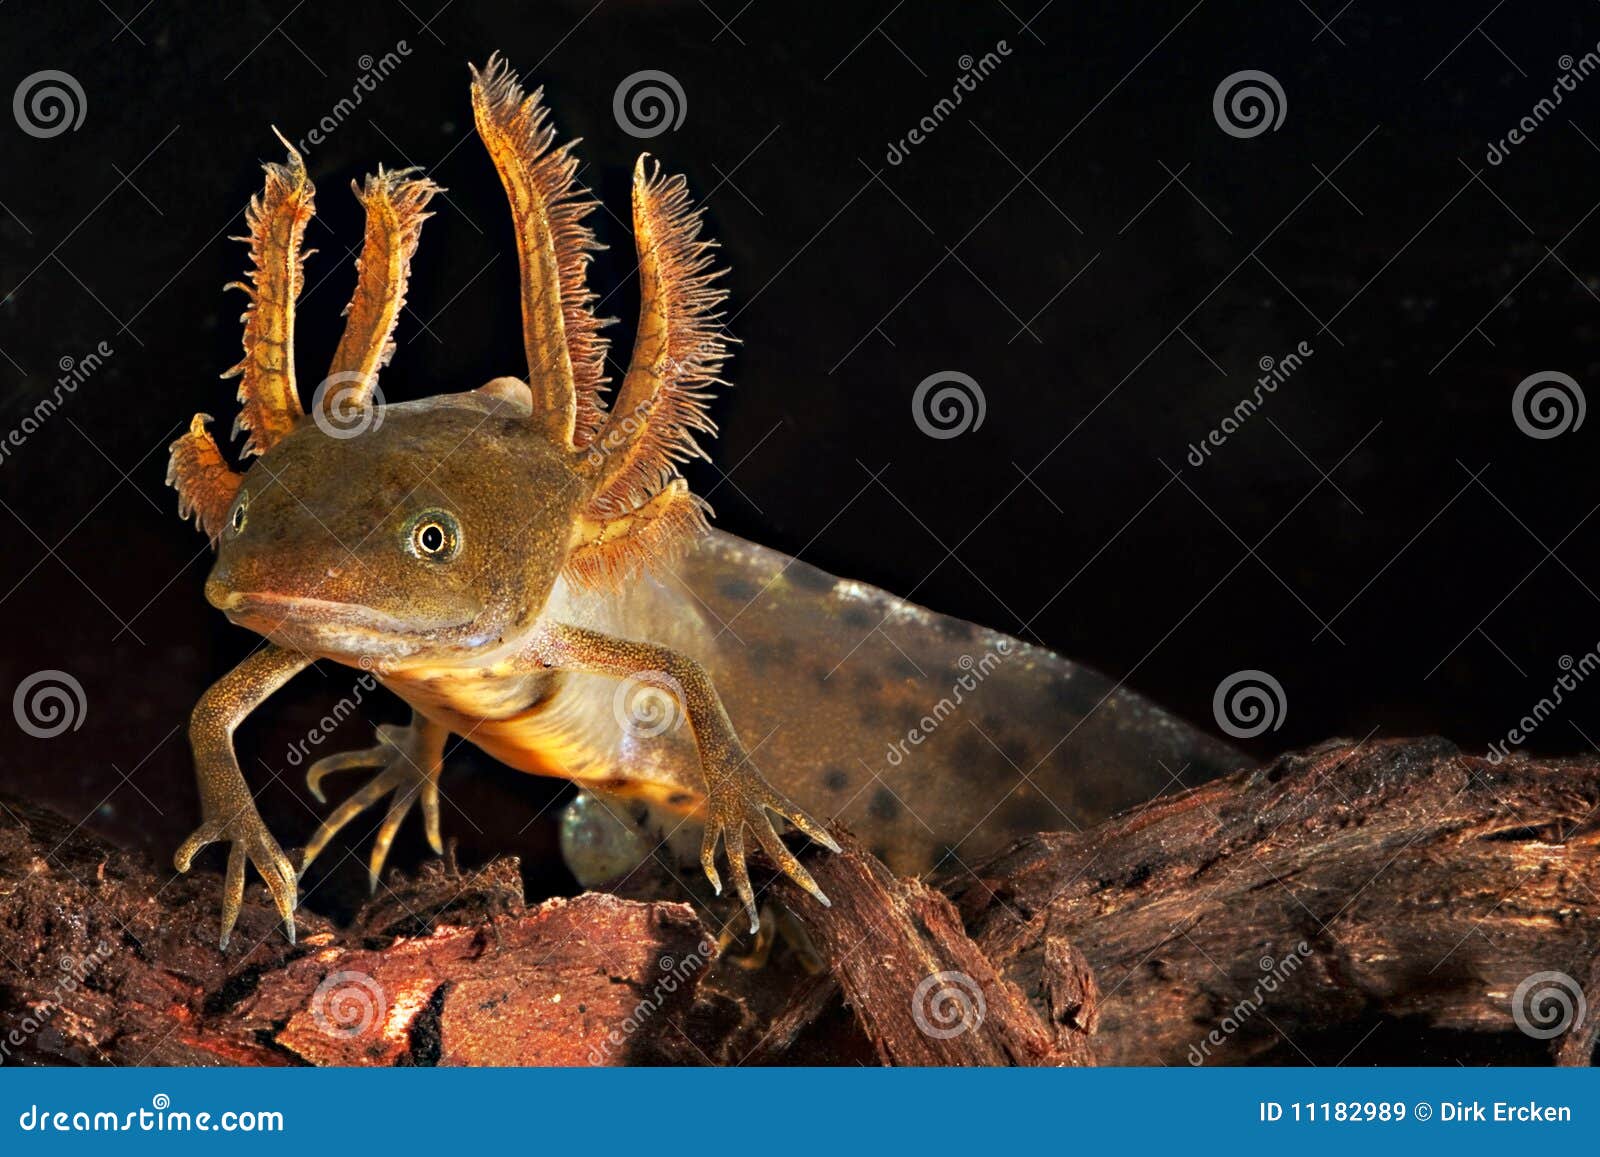 crested newt tadpole water salamander amphibian